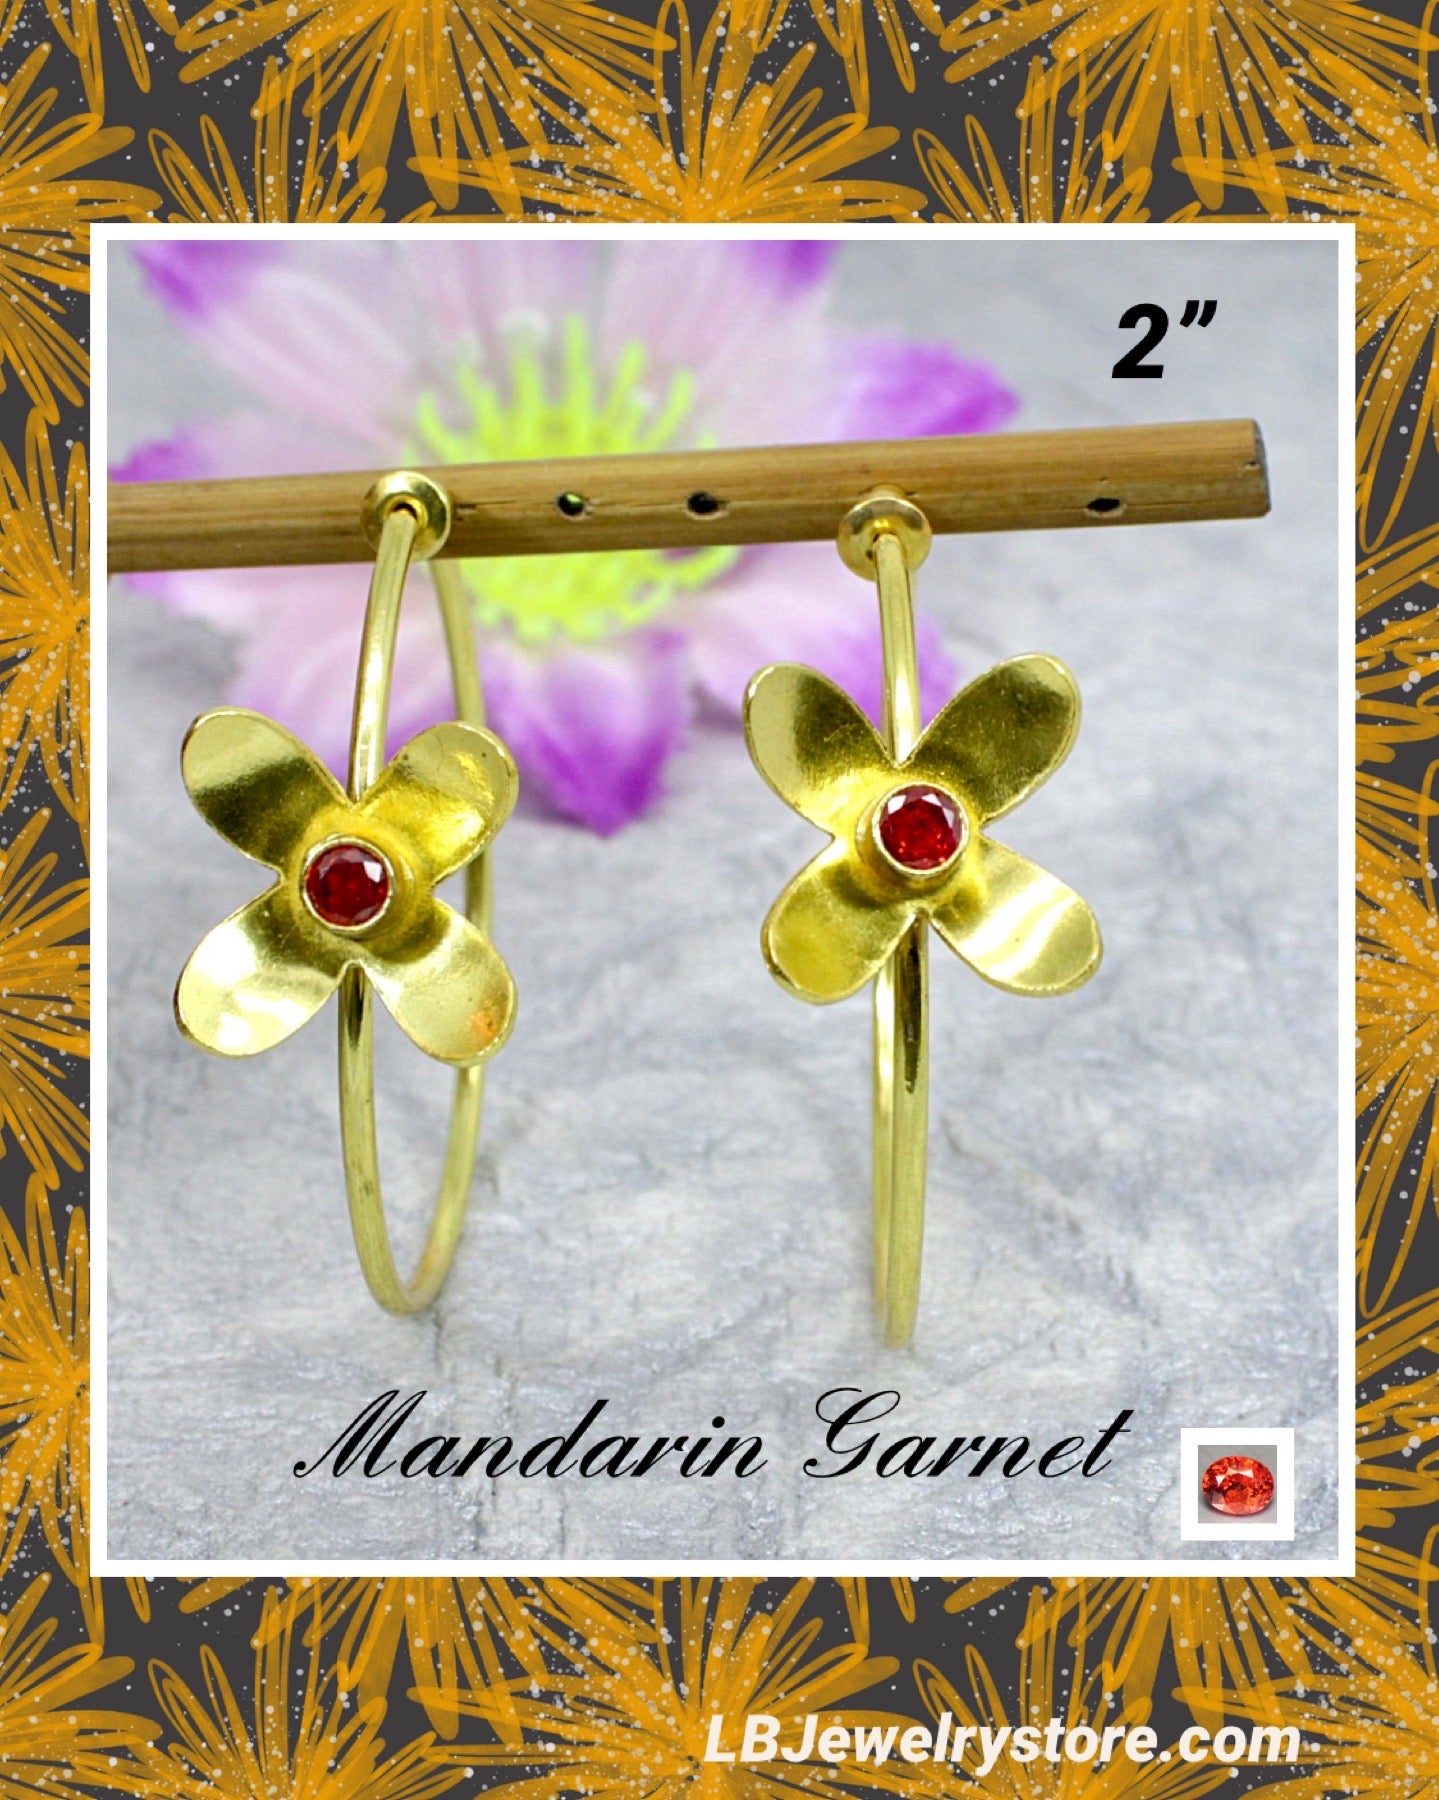 Mandarin Garnet Gemstone Flower Gold-Filled Hoop Earrings 2”